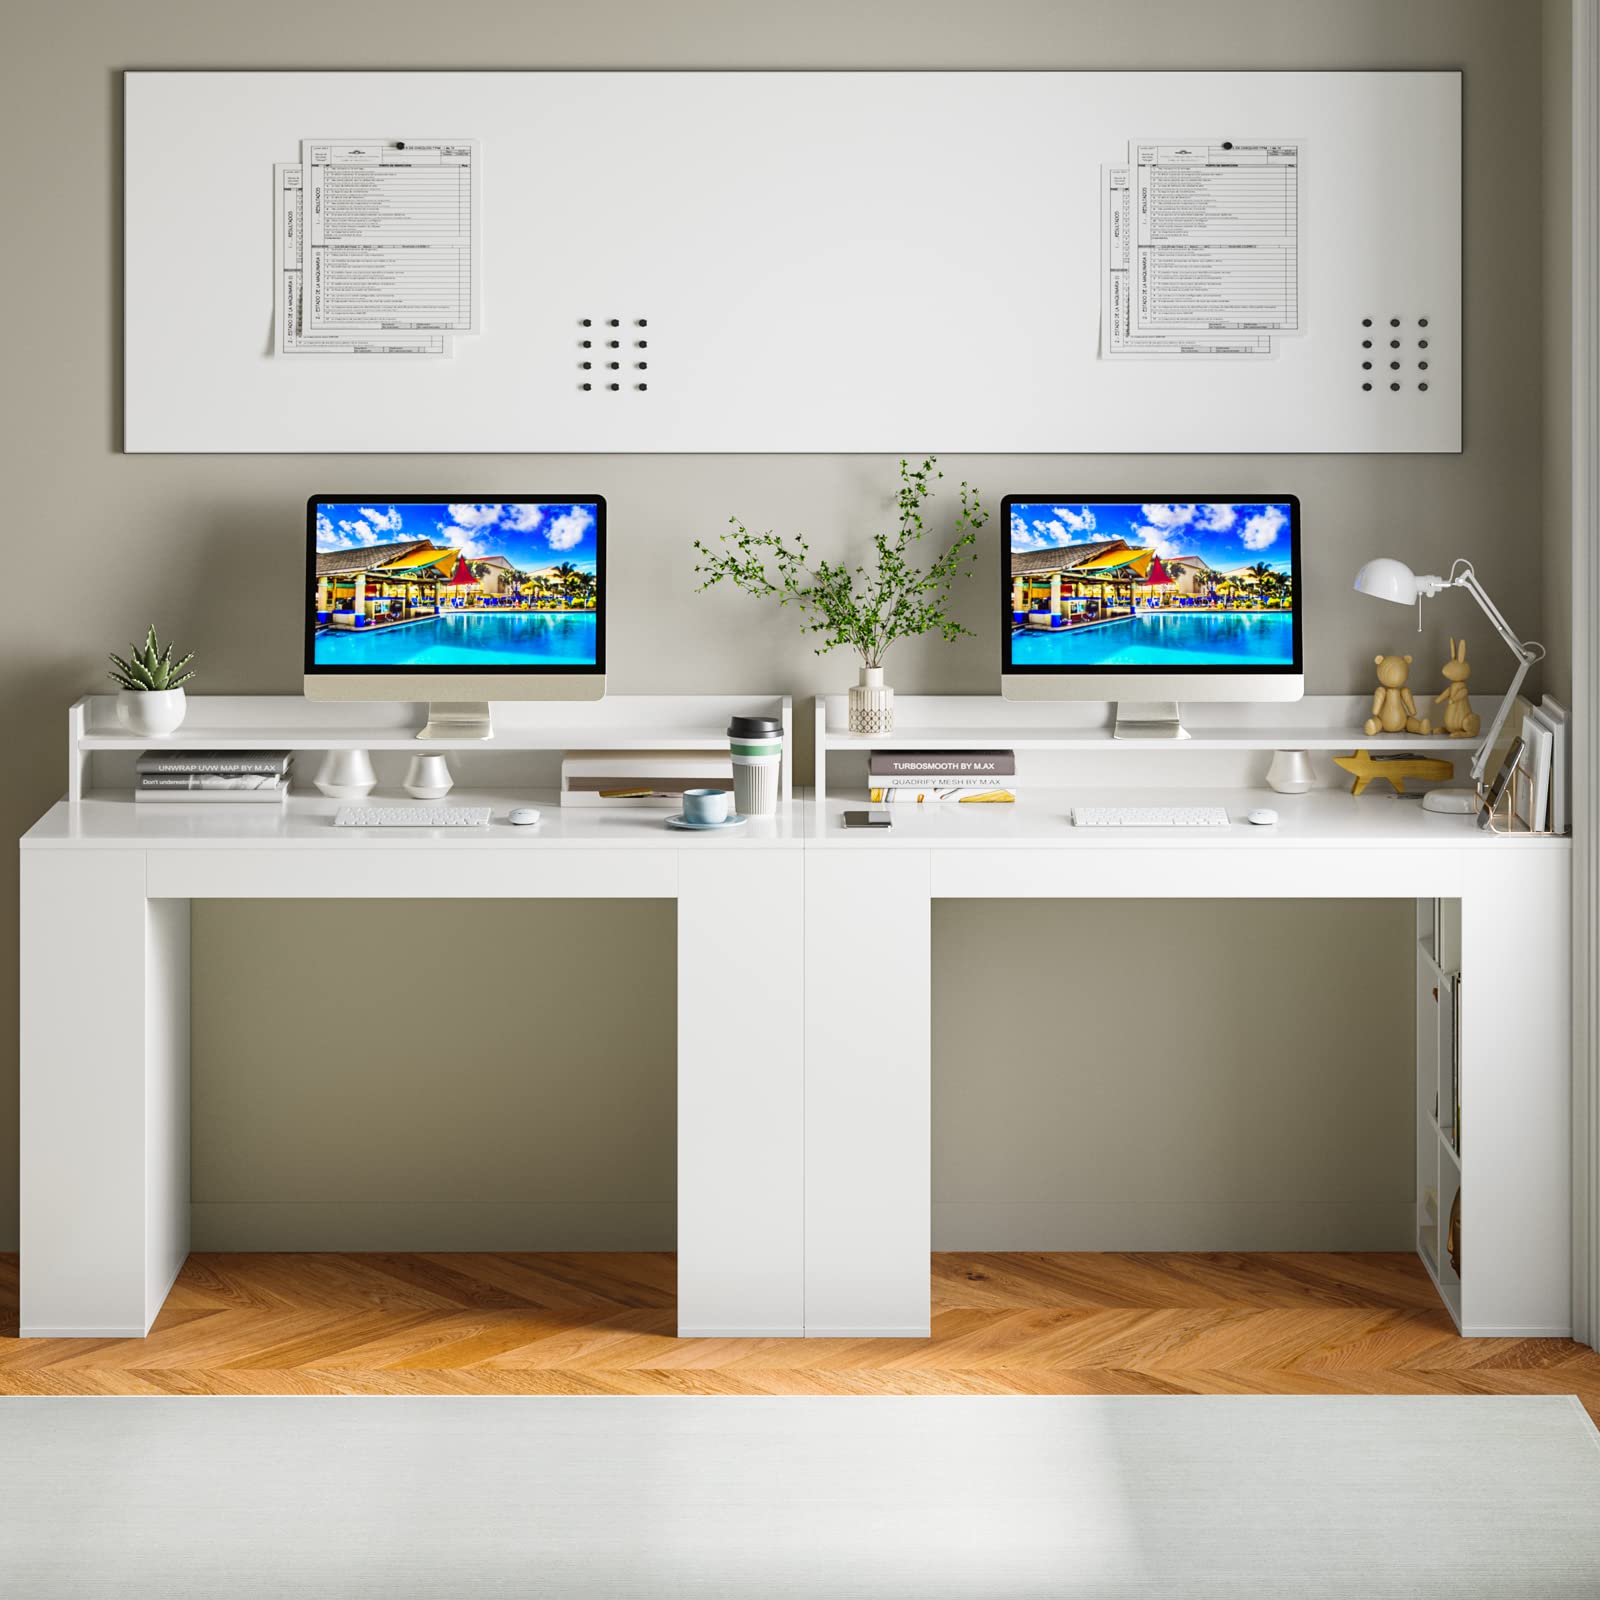 Tangkula 48 Modern Computer Desk Home Office Workstation w/ Hutch & Storage Shelves White